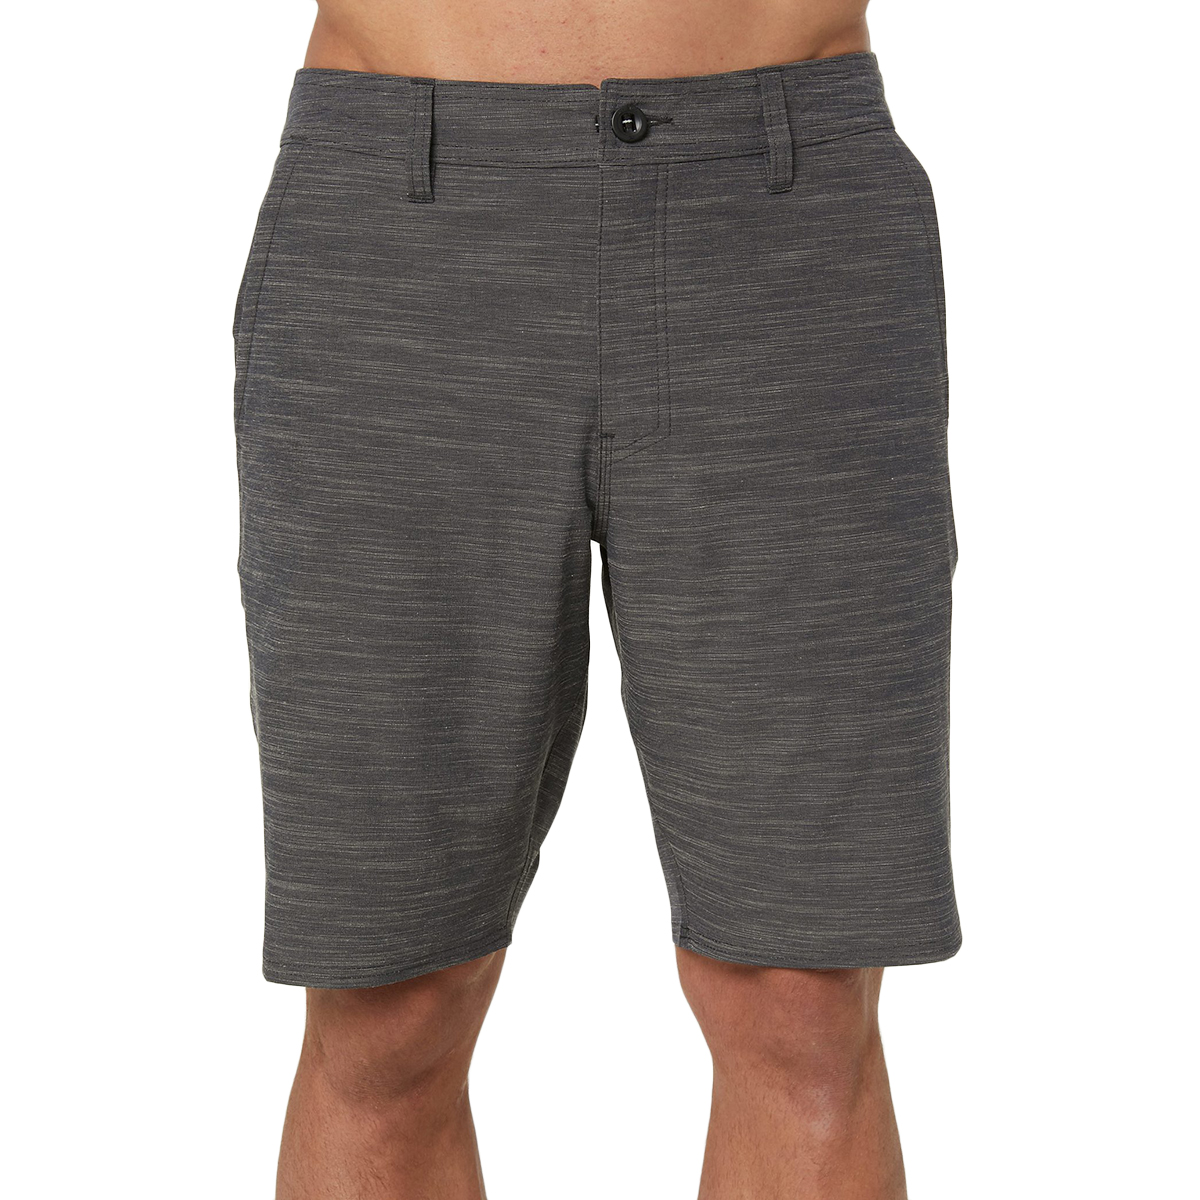 O'neill Men's Locked Slub Hybrid Shorts - Black, 38